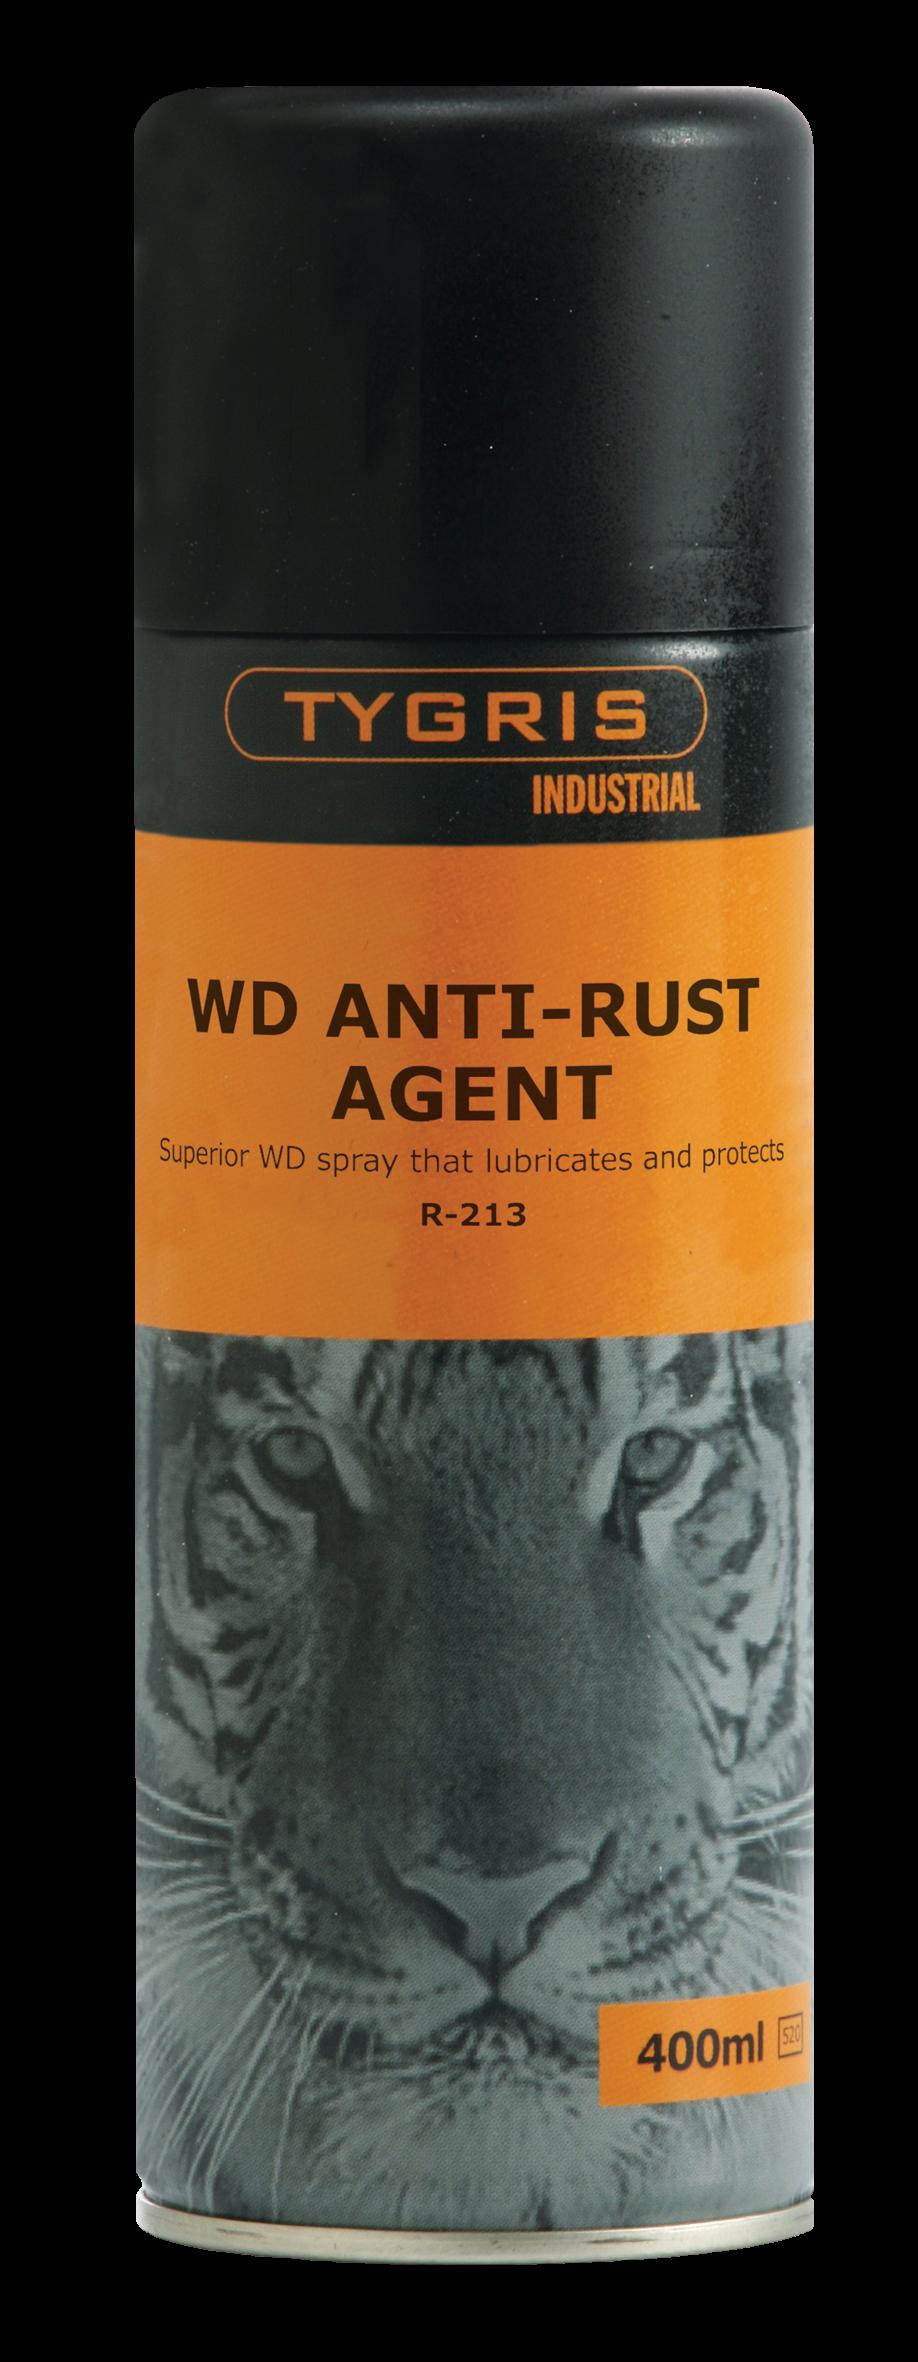 WD Anti-Rust Agent